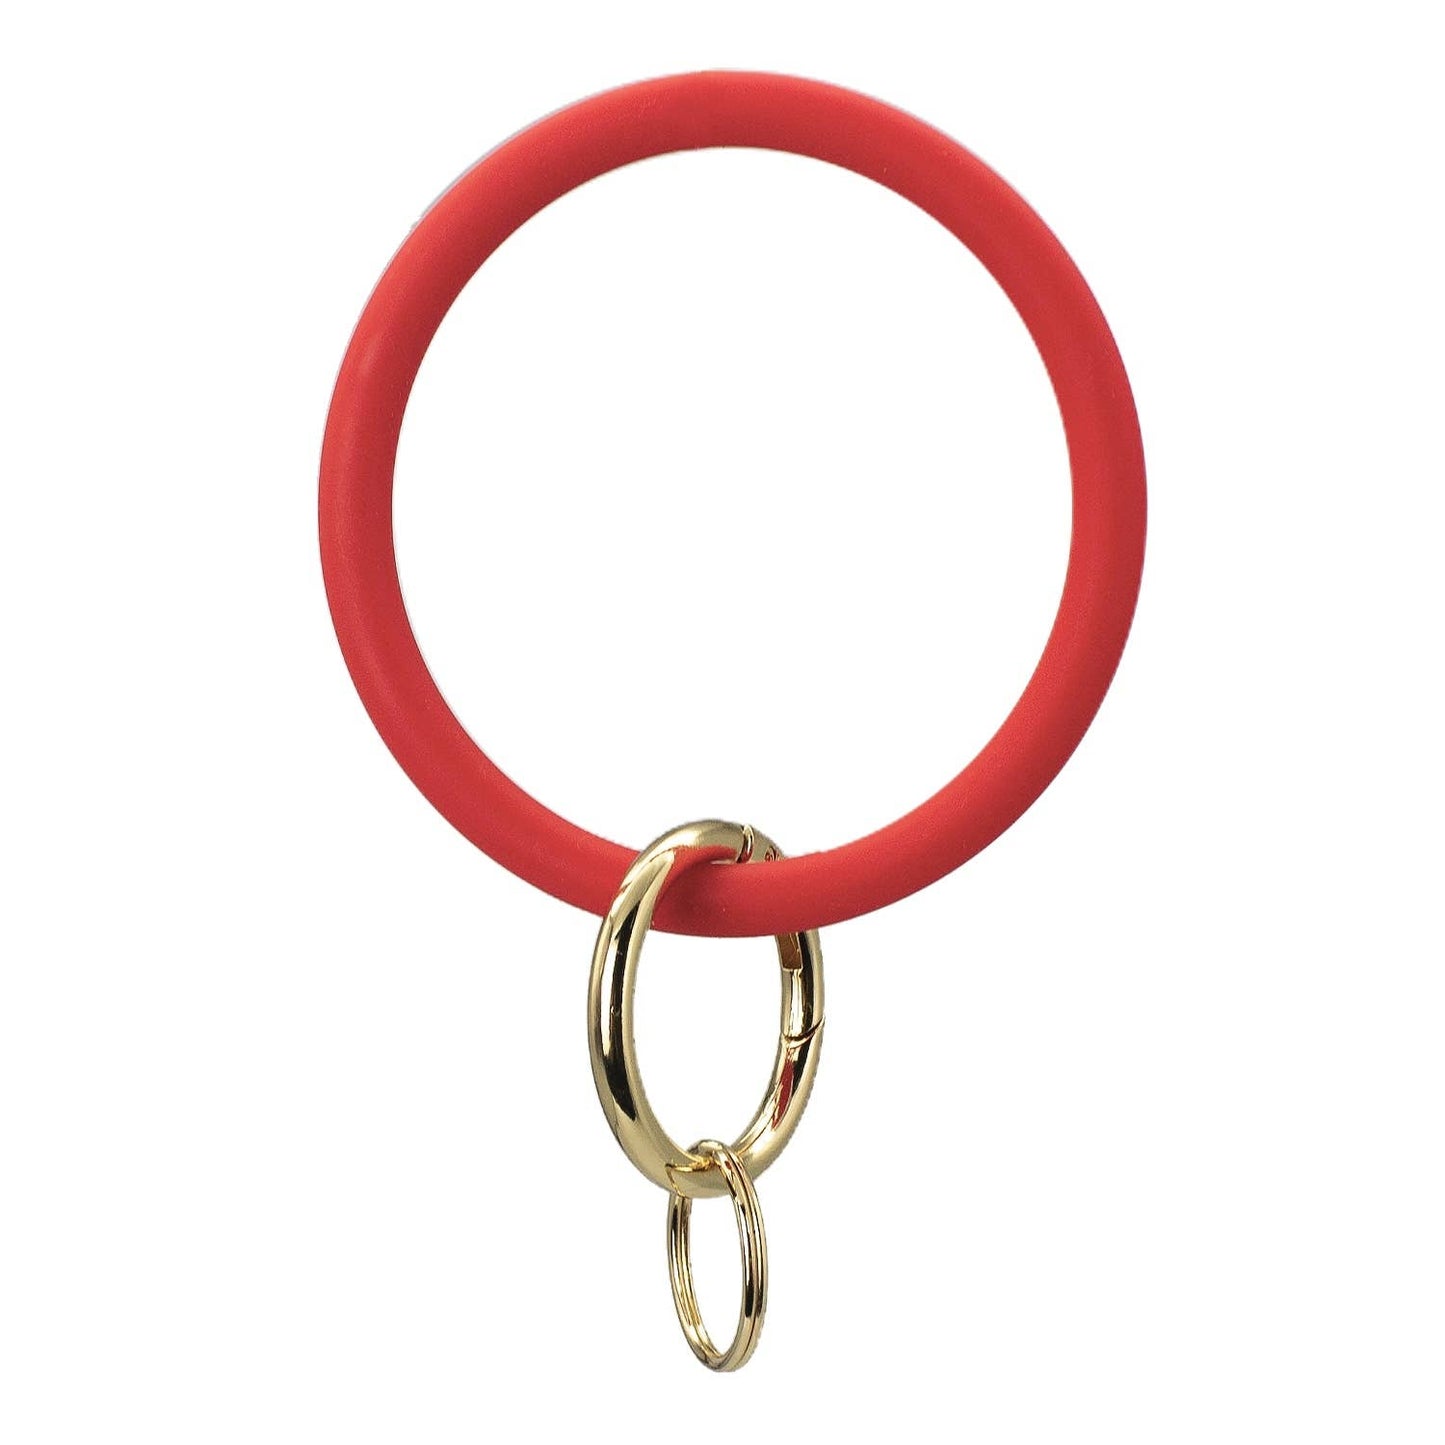 Silicone Bracelet Keychain | Assortment